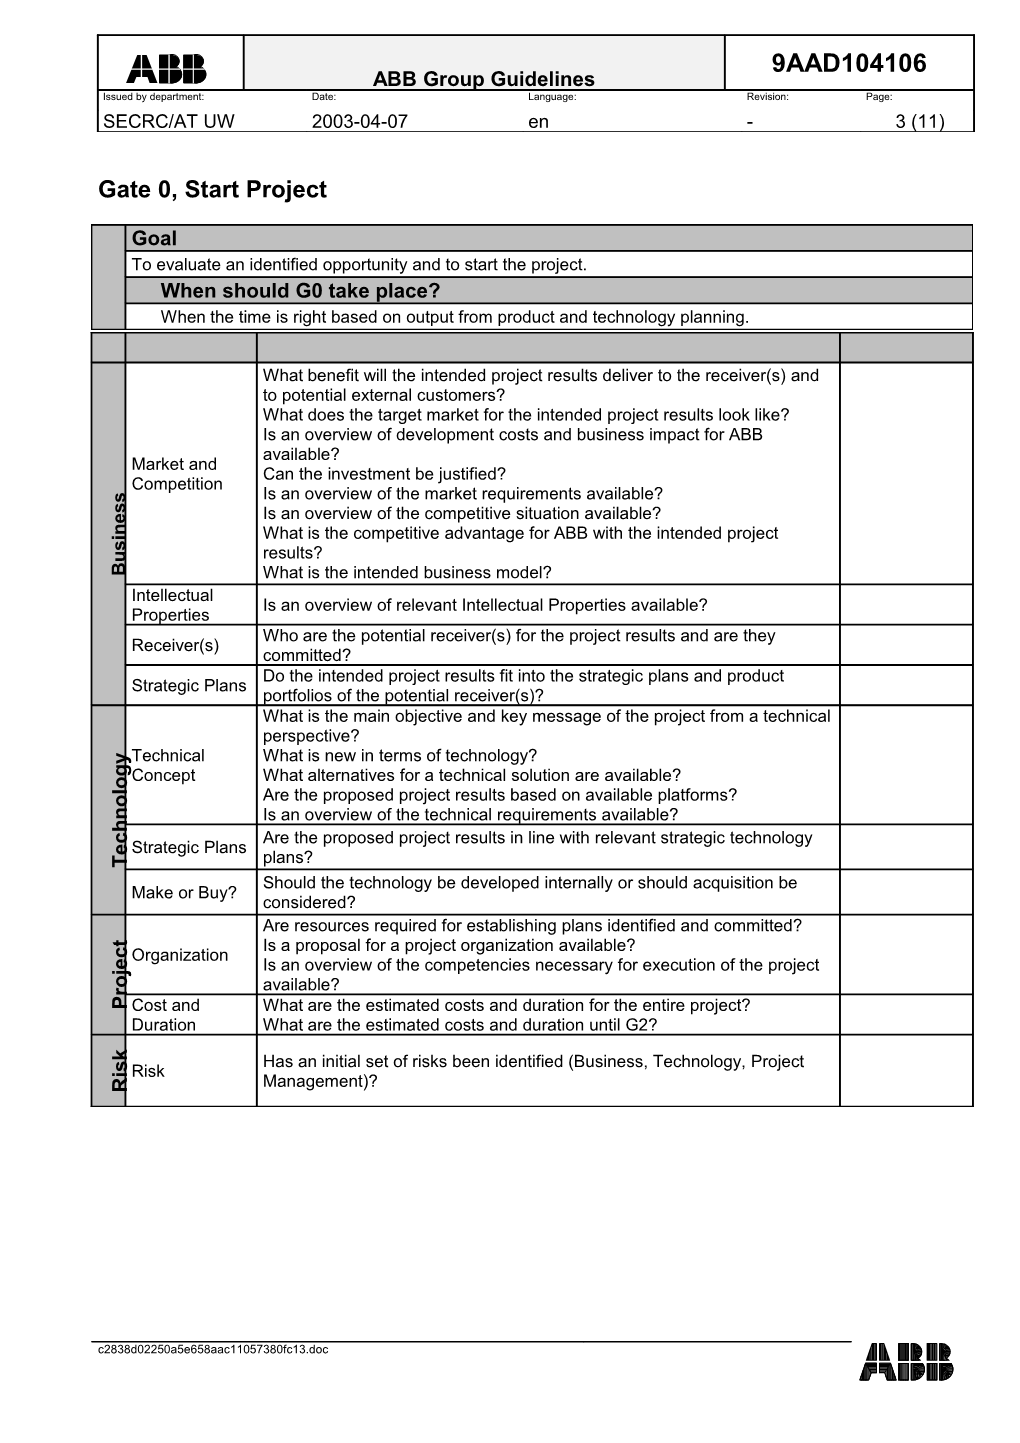 Gate Assessment Checklist